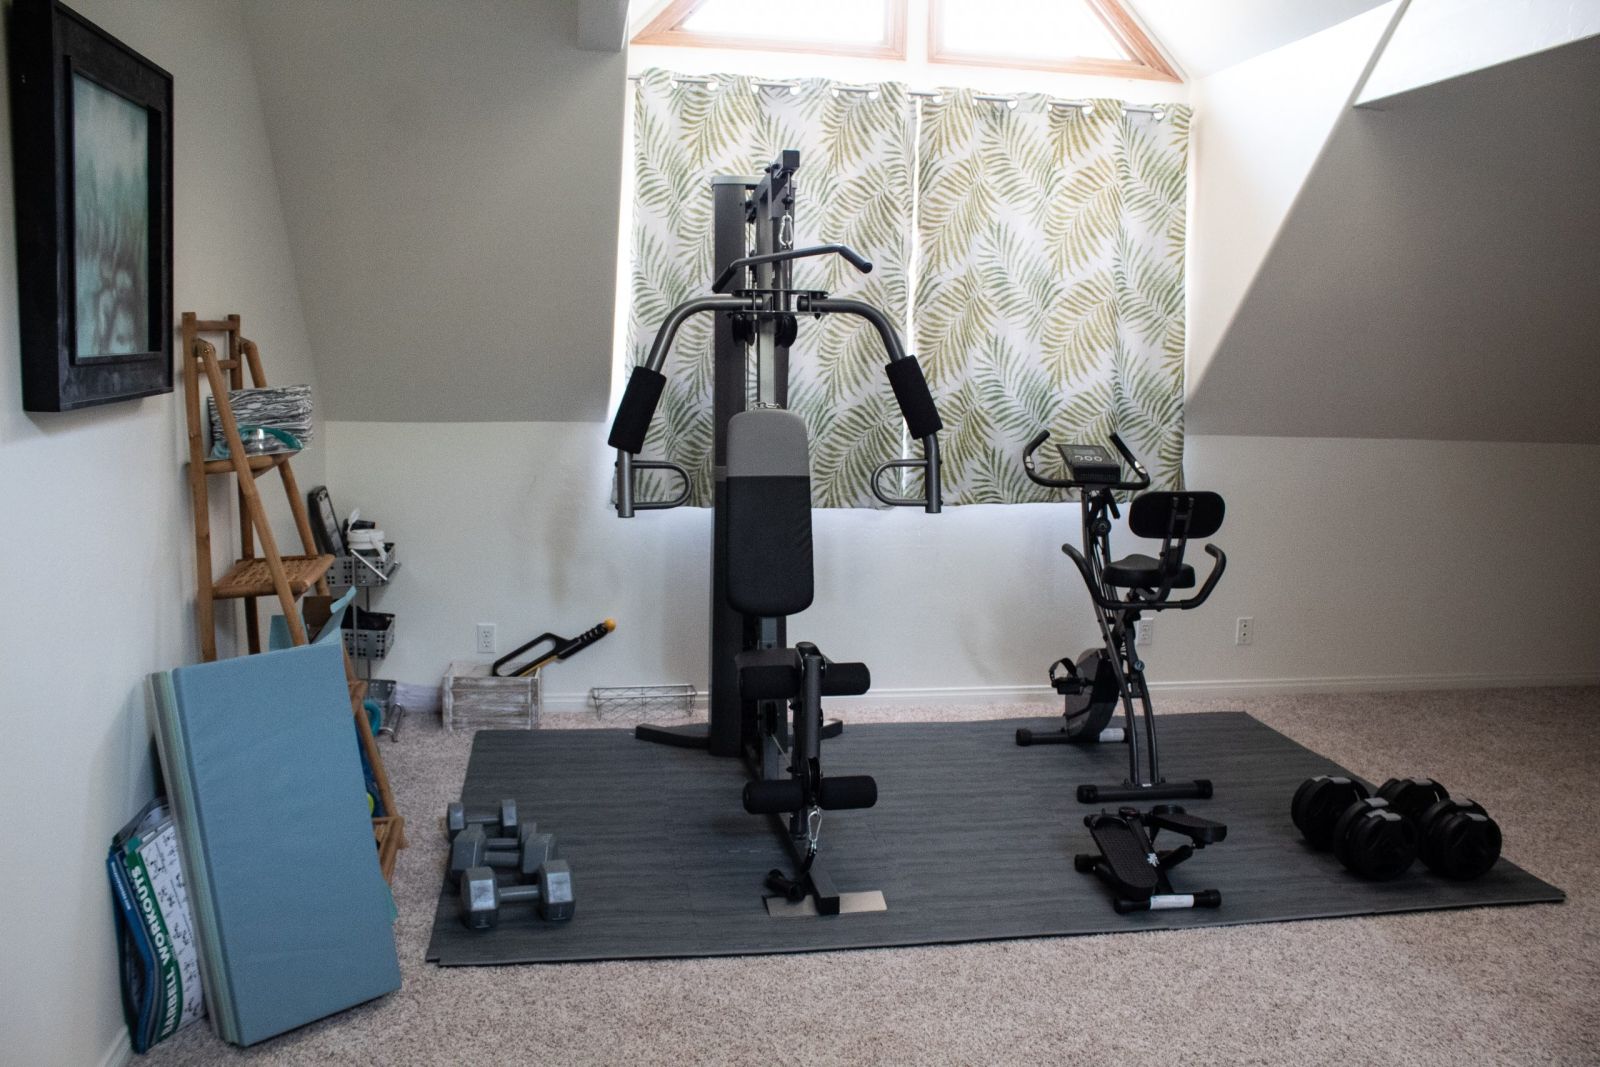 personal training nanaimo at home gym setup exercise bike dumbbells